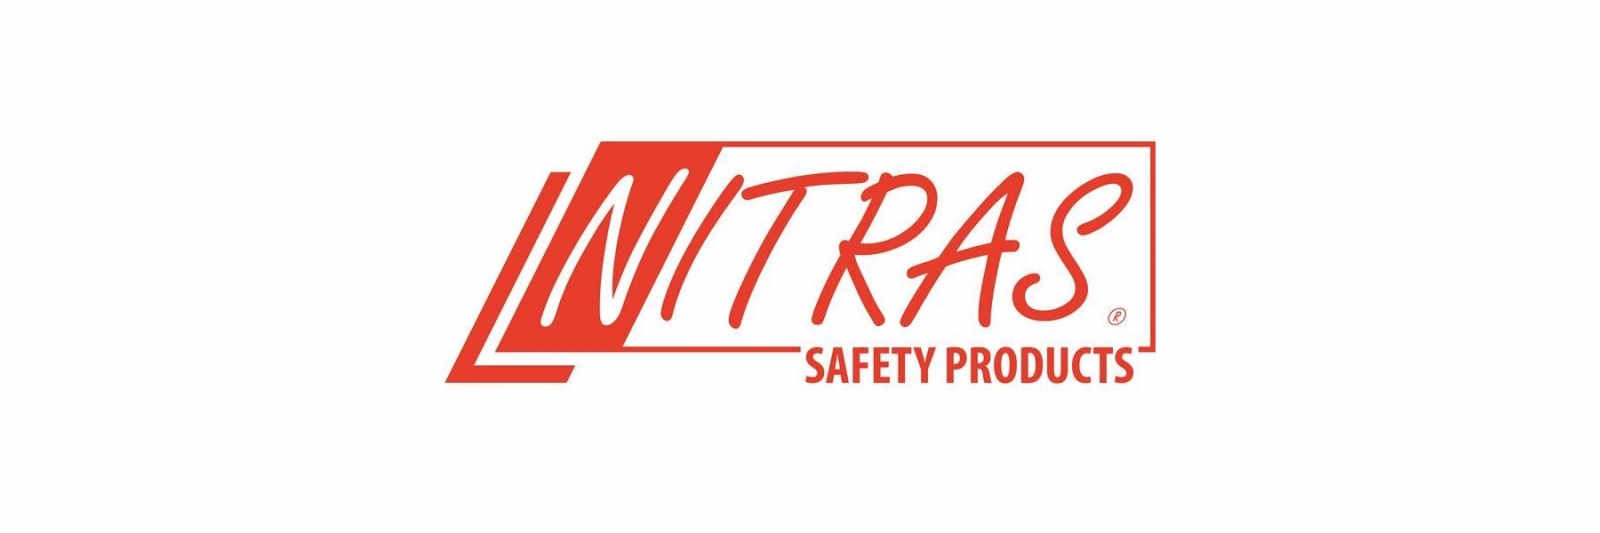 pics/Nitras/nitras-logo.jpg